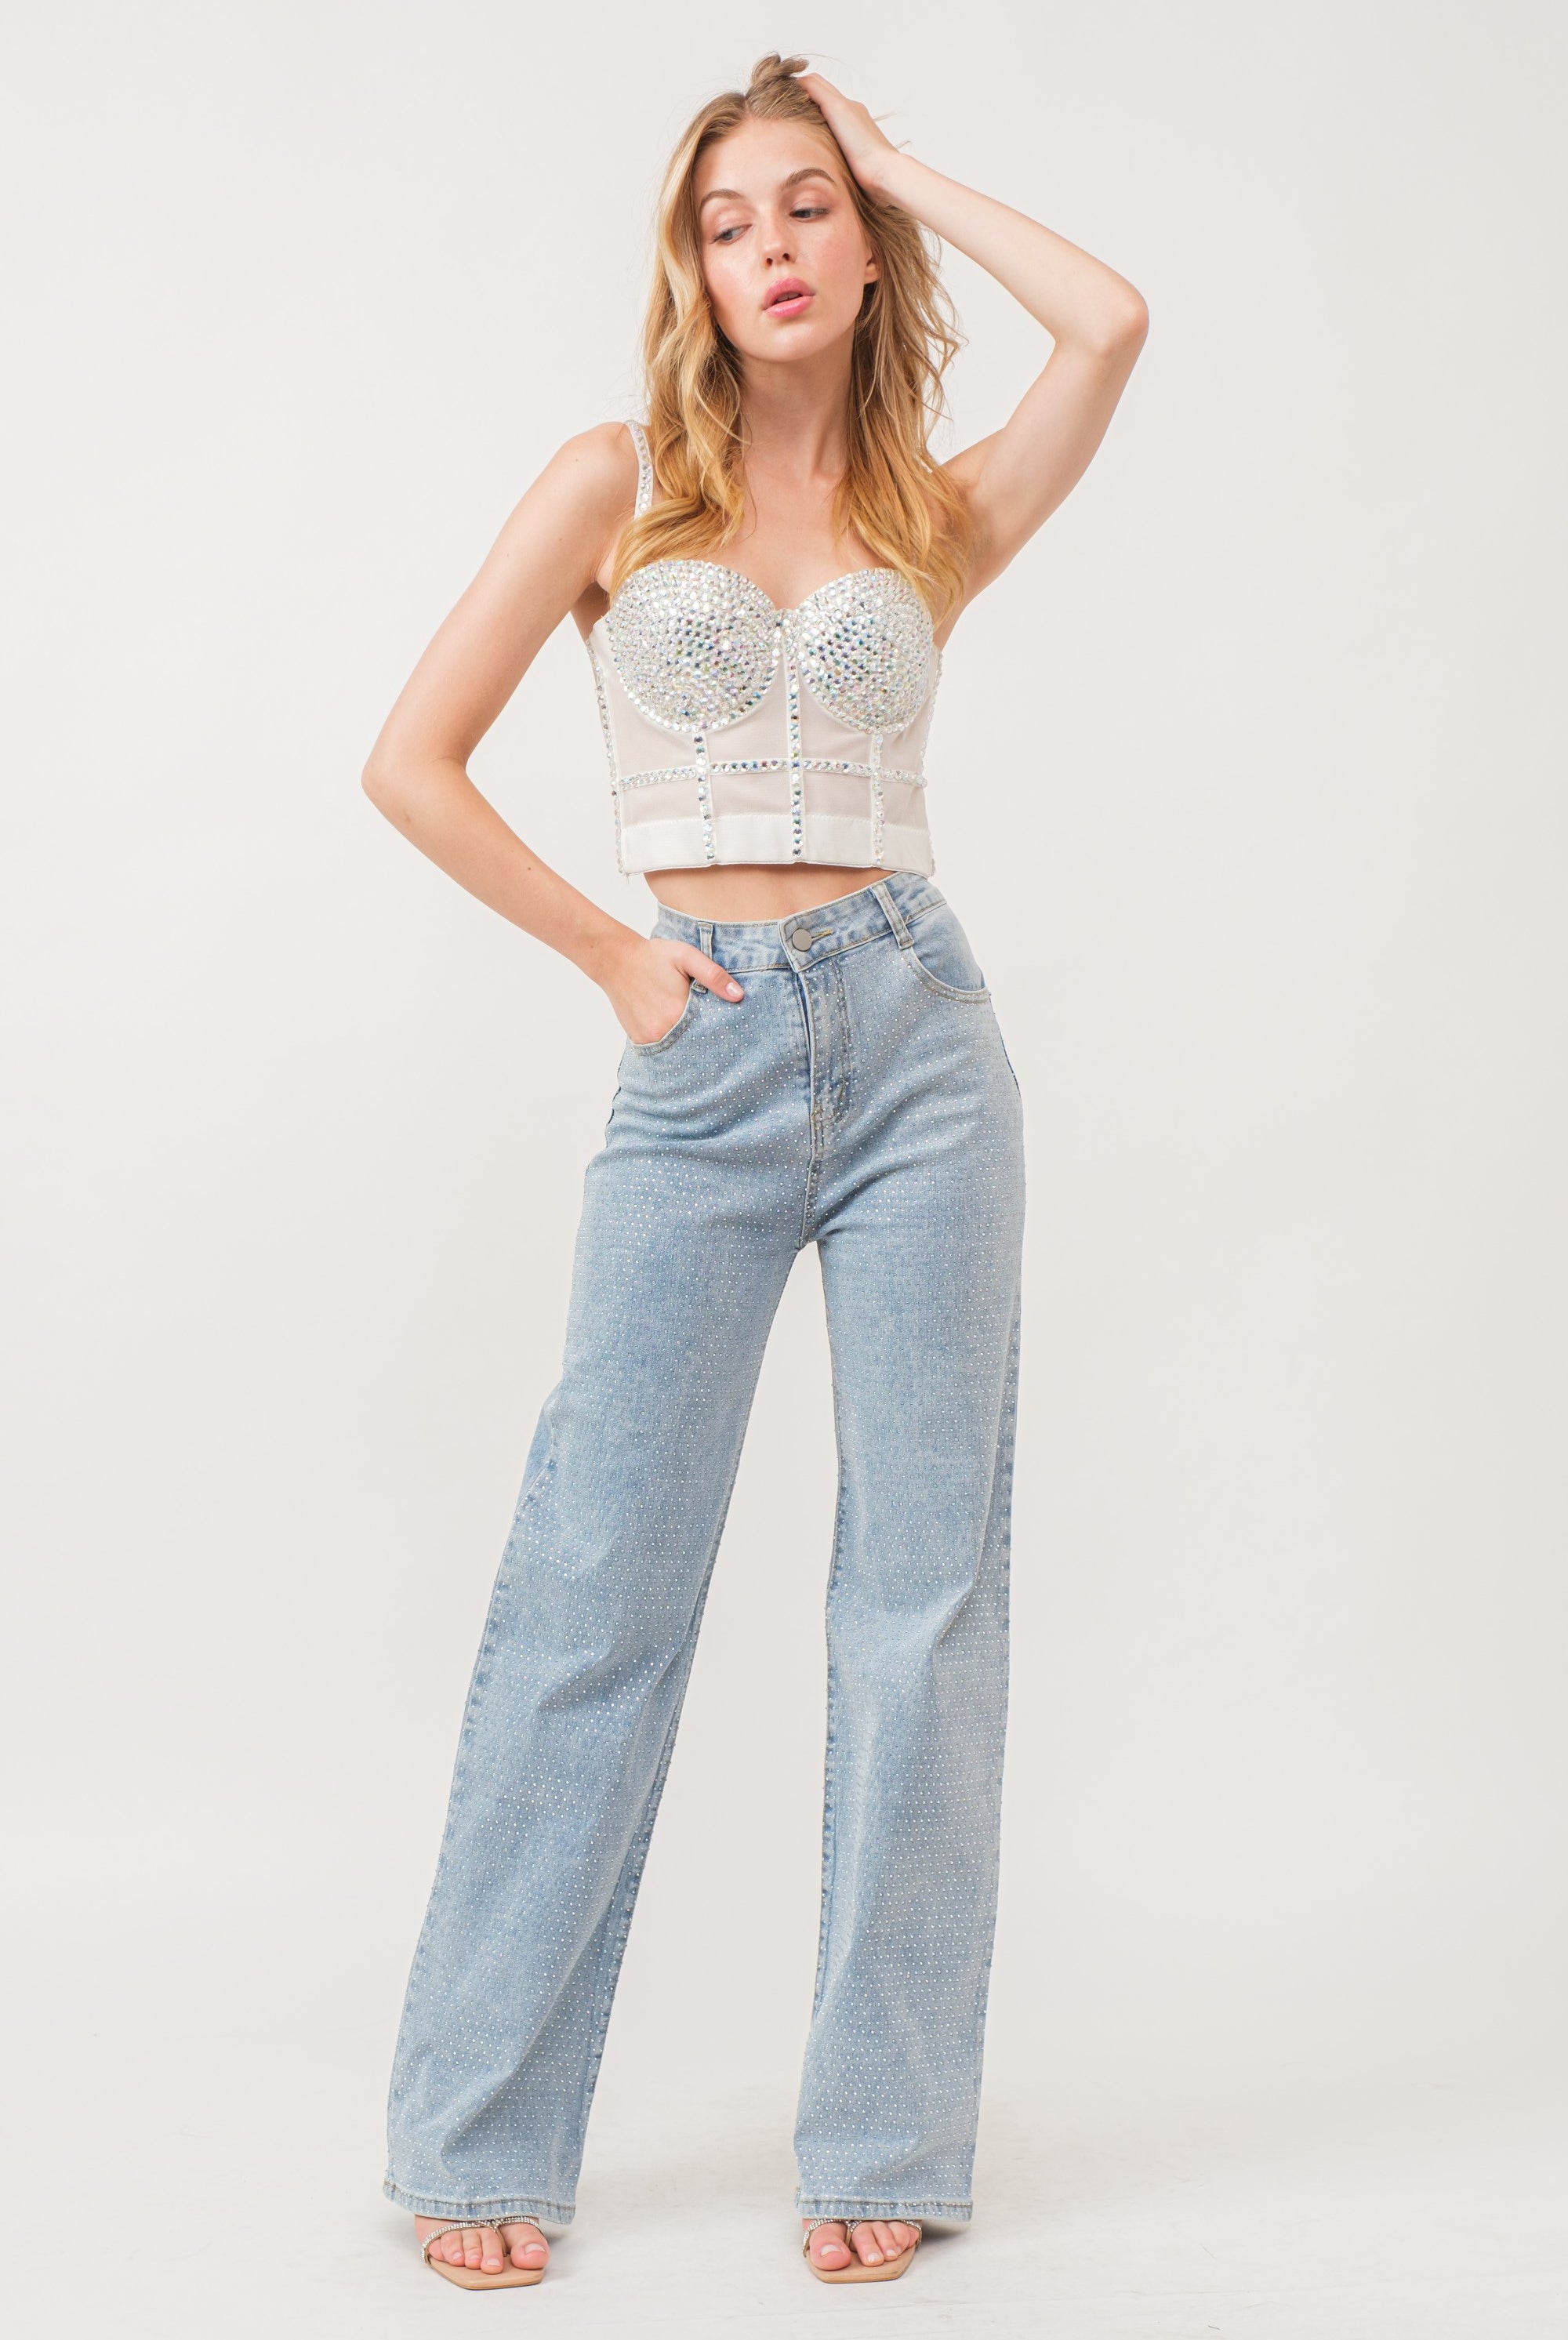 Rhinestone Hotfix stretch denim pants-Jeans-Krush Kandy, Women's Online Fashion Boutique Located in Phoenix, Arizona (Scottsdale Area)